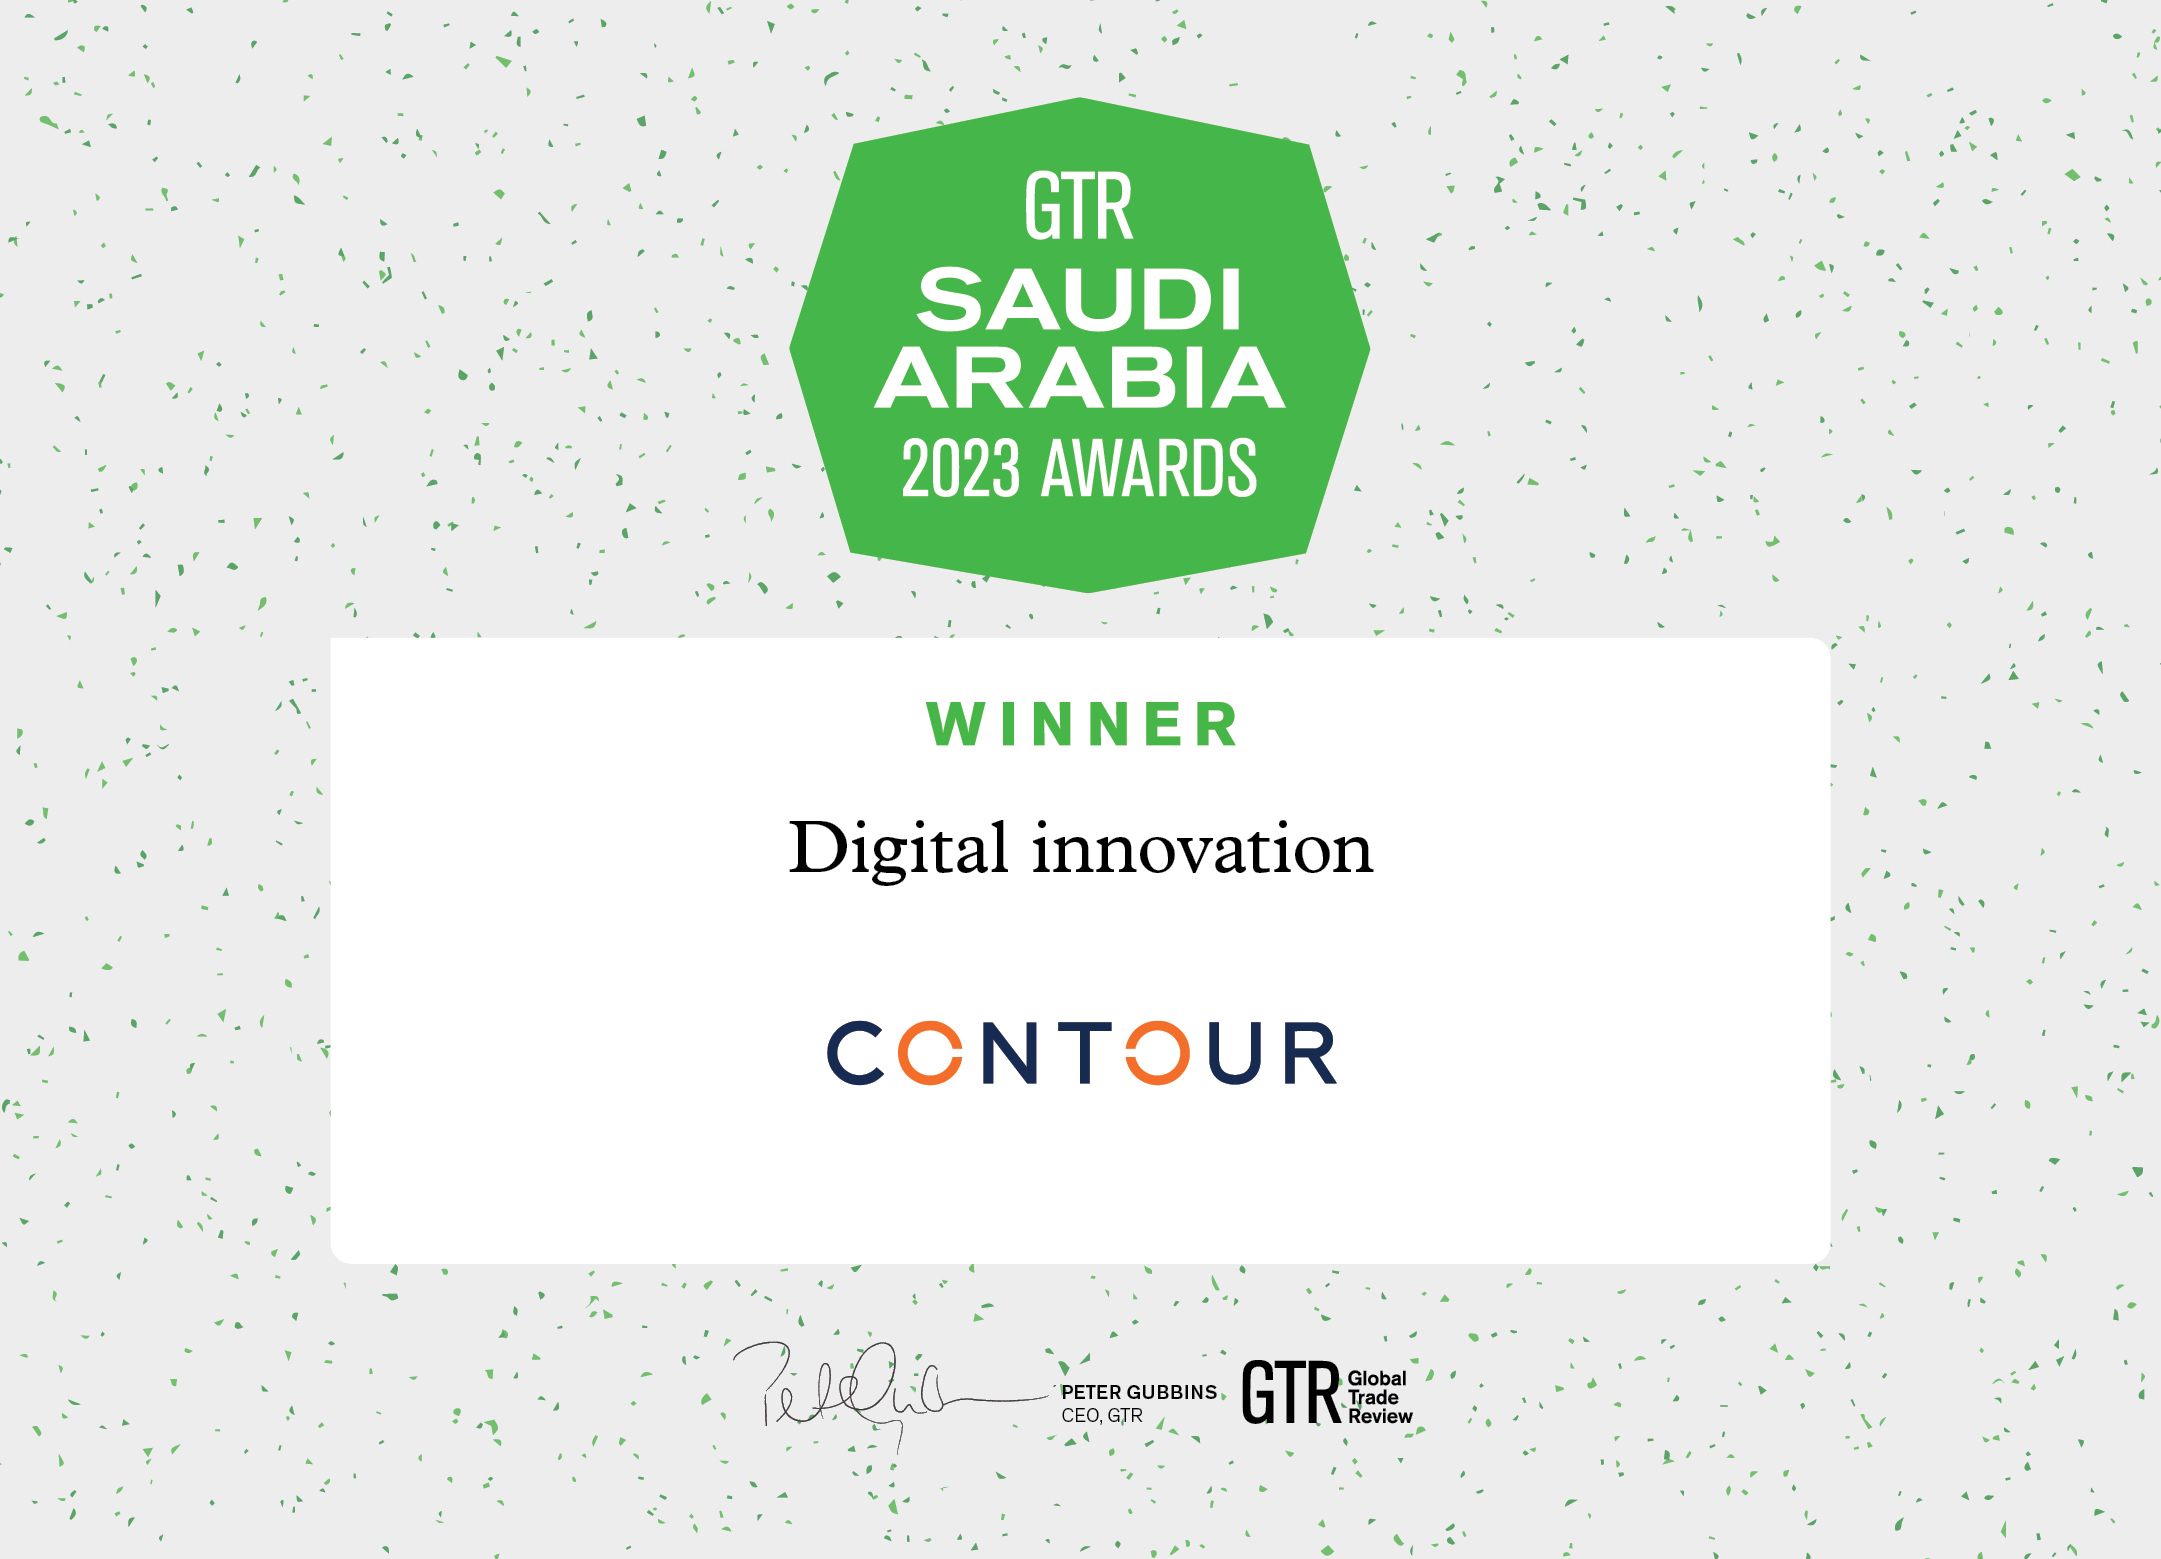 Contour wins award for Digital Innovation at the inaugural GTR Saudi Arabia 2023 Awards